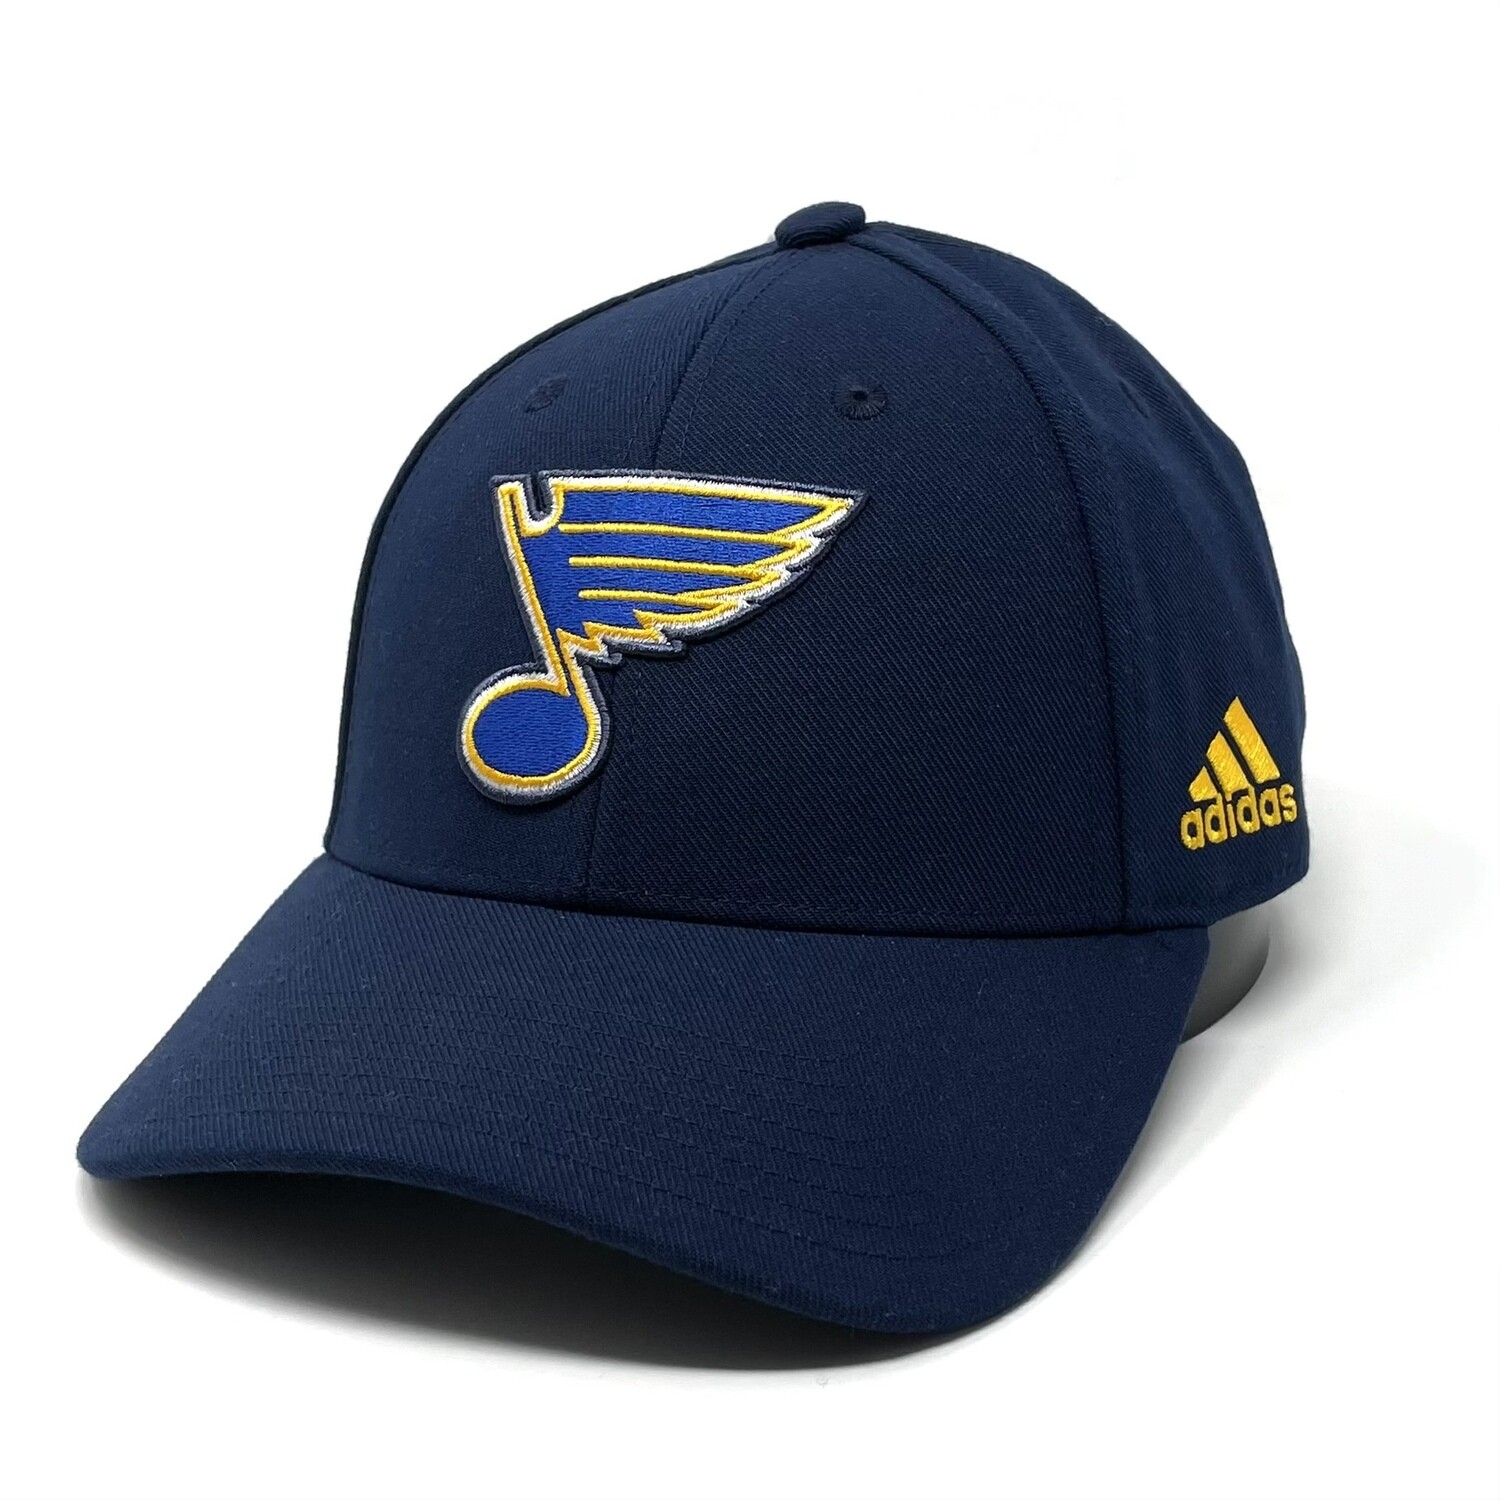 St. Louis Blues Men’s Adidas Strapback Adjustable Hat